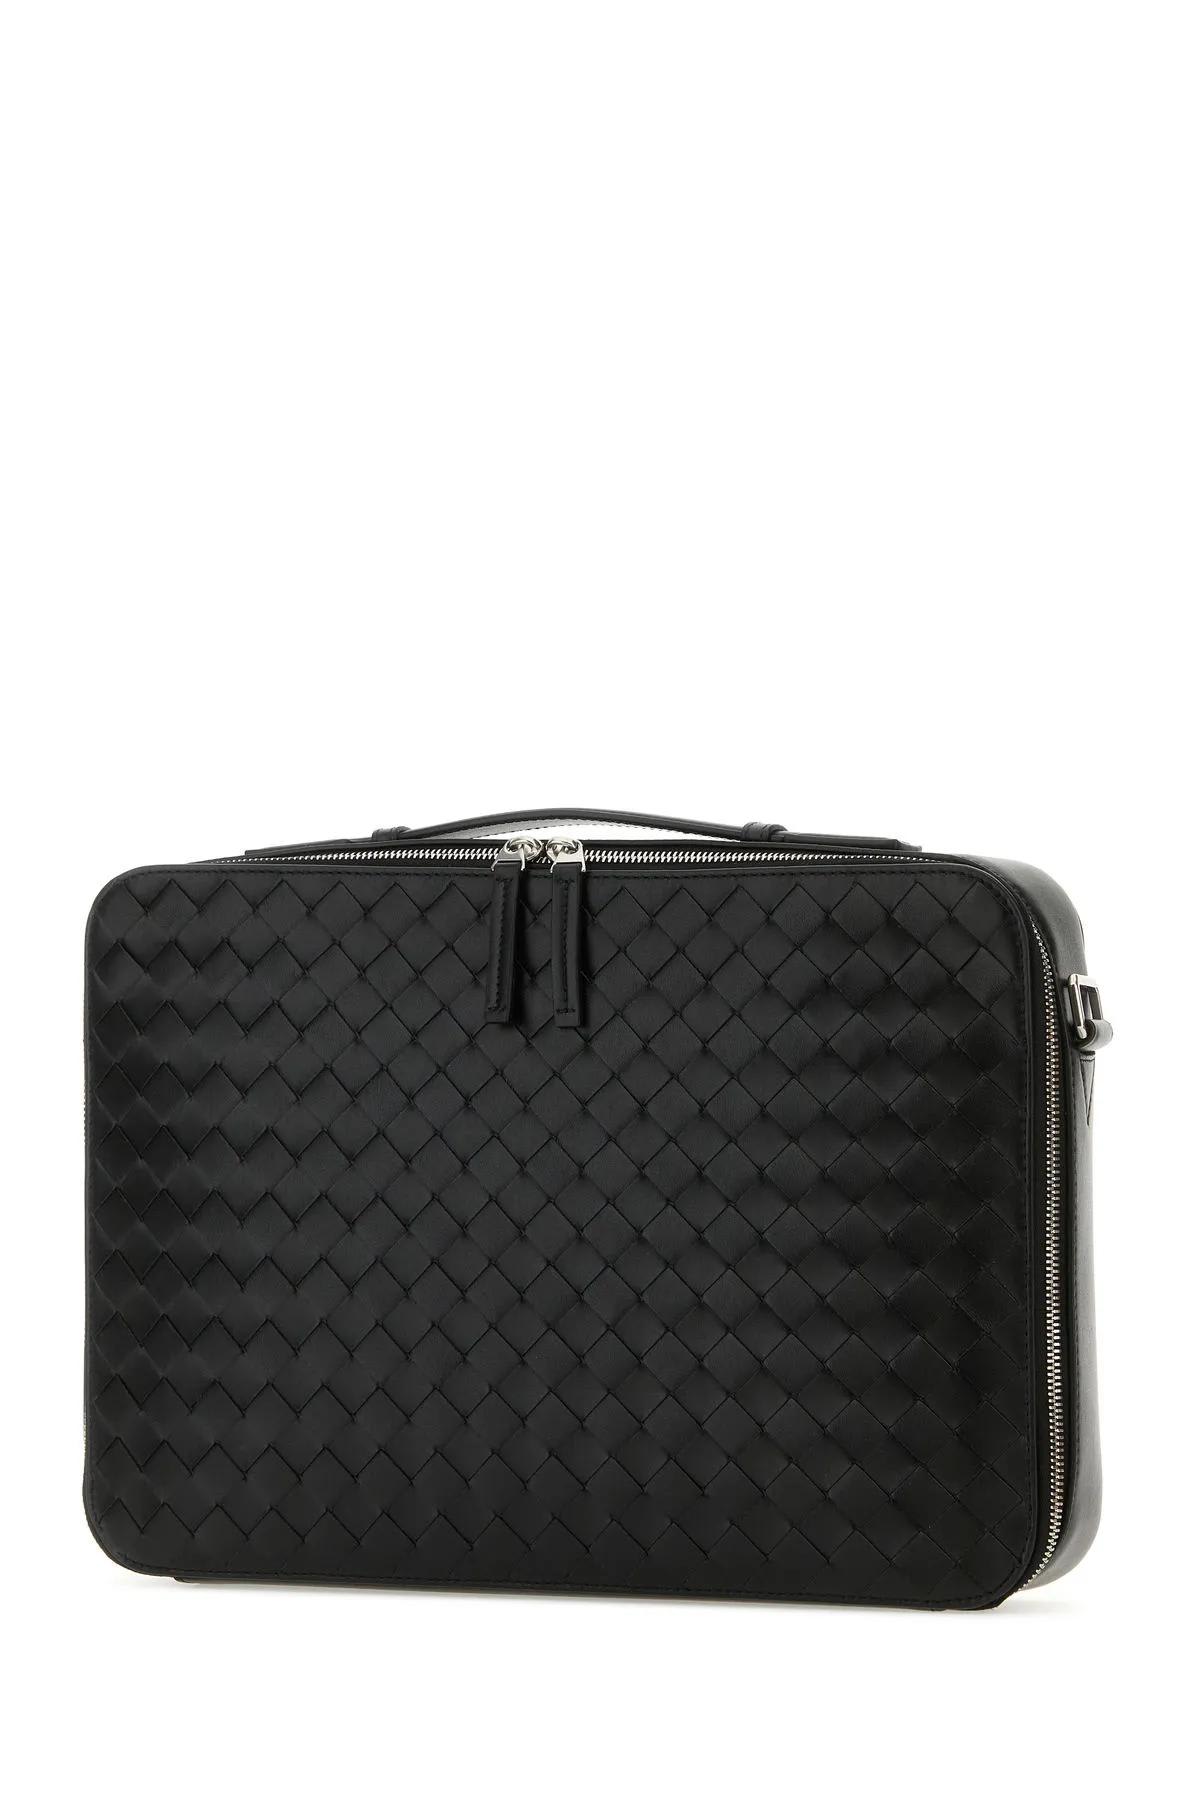 Shop Bottega Veneta Black Leather Briefcase